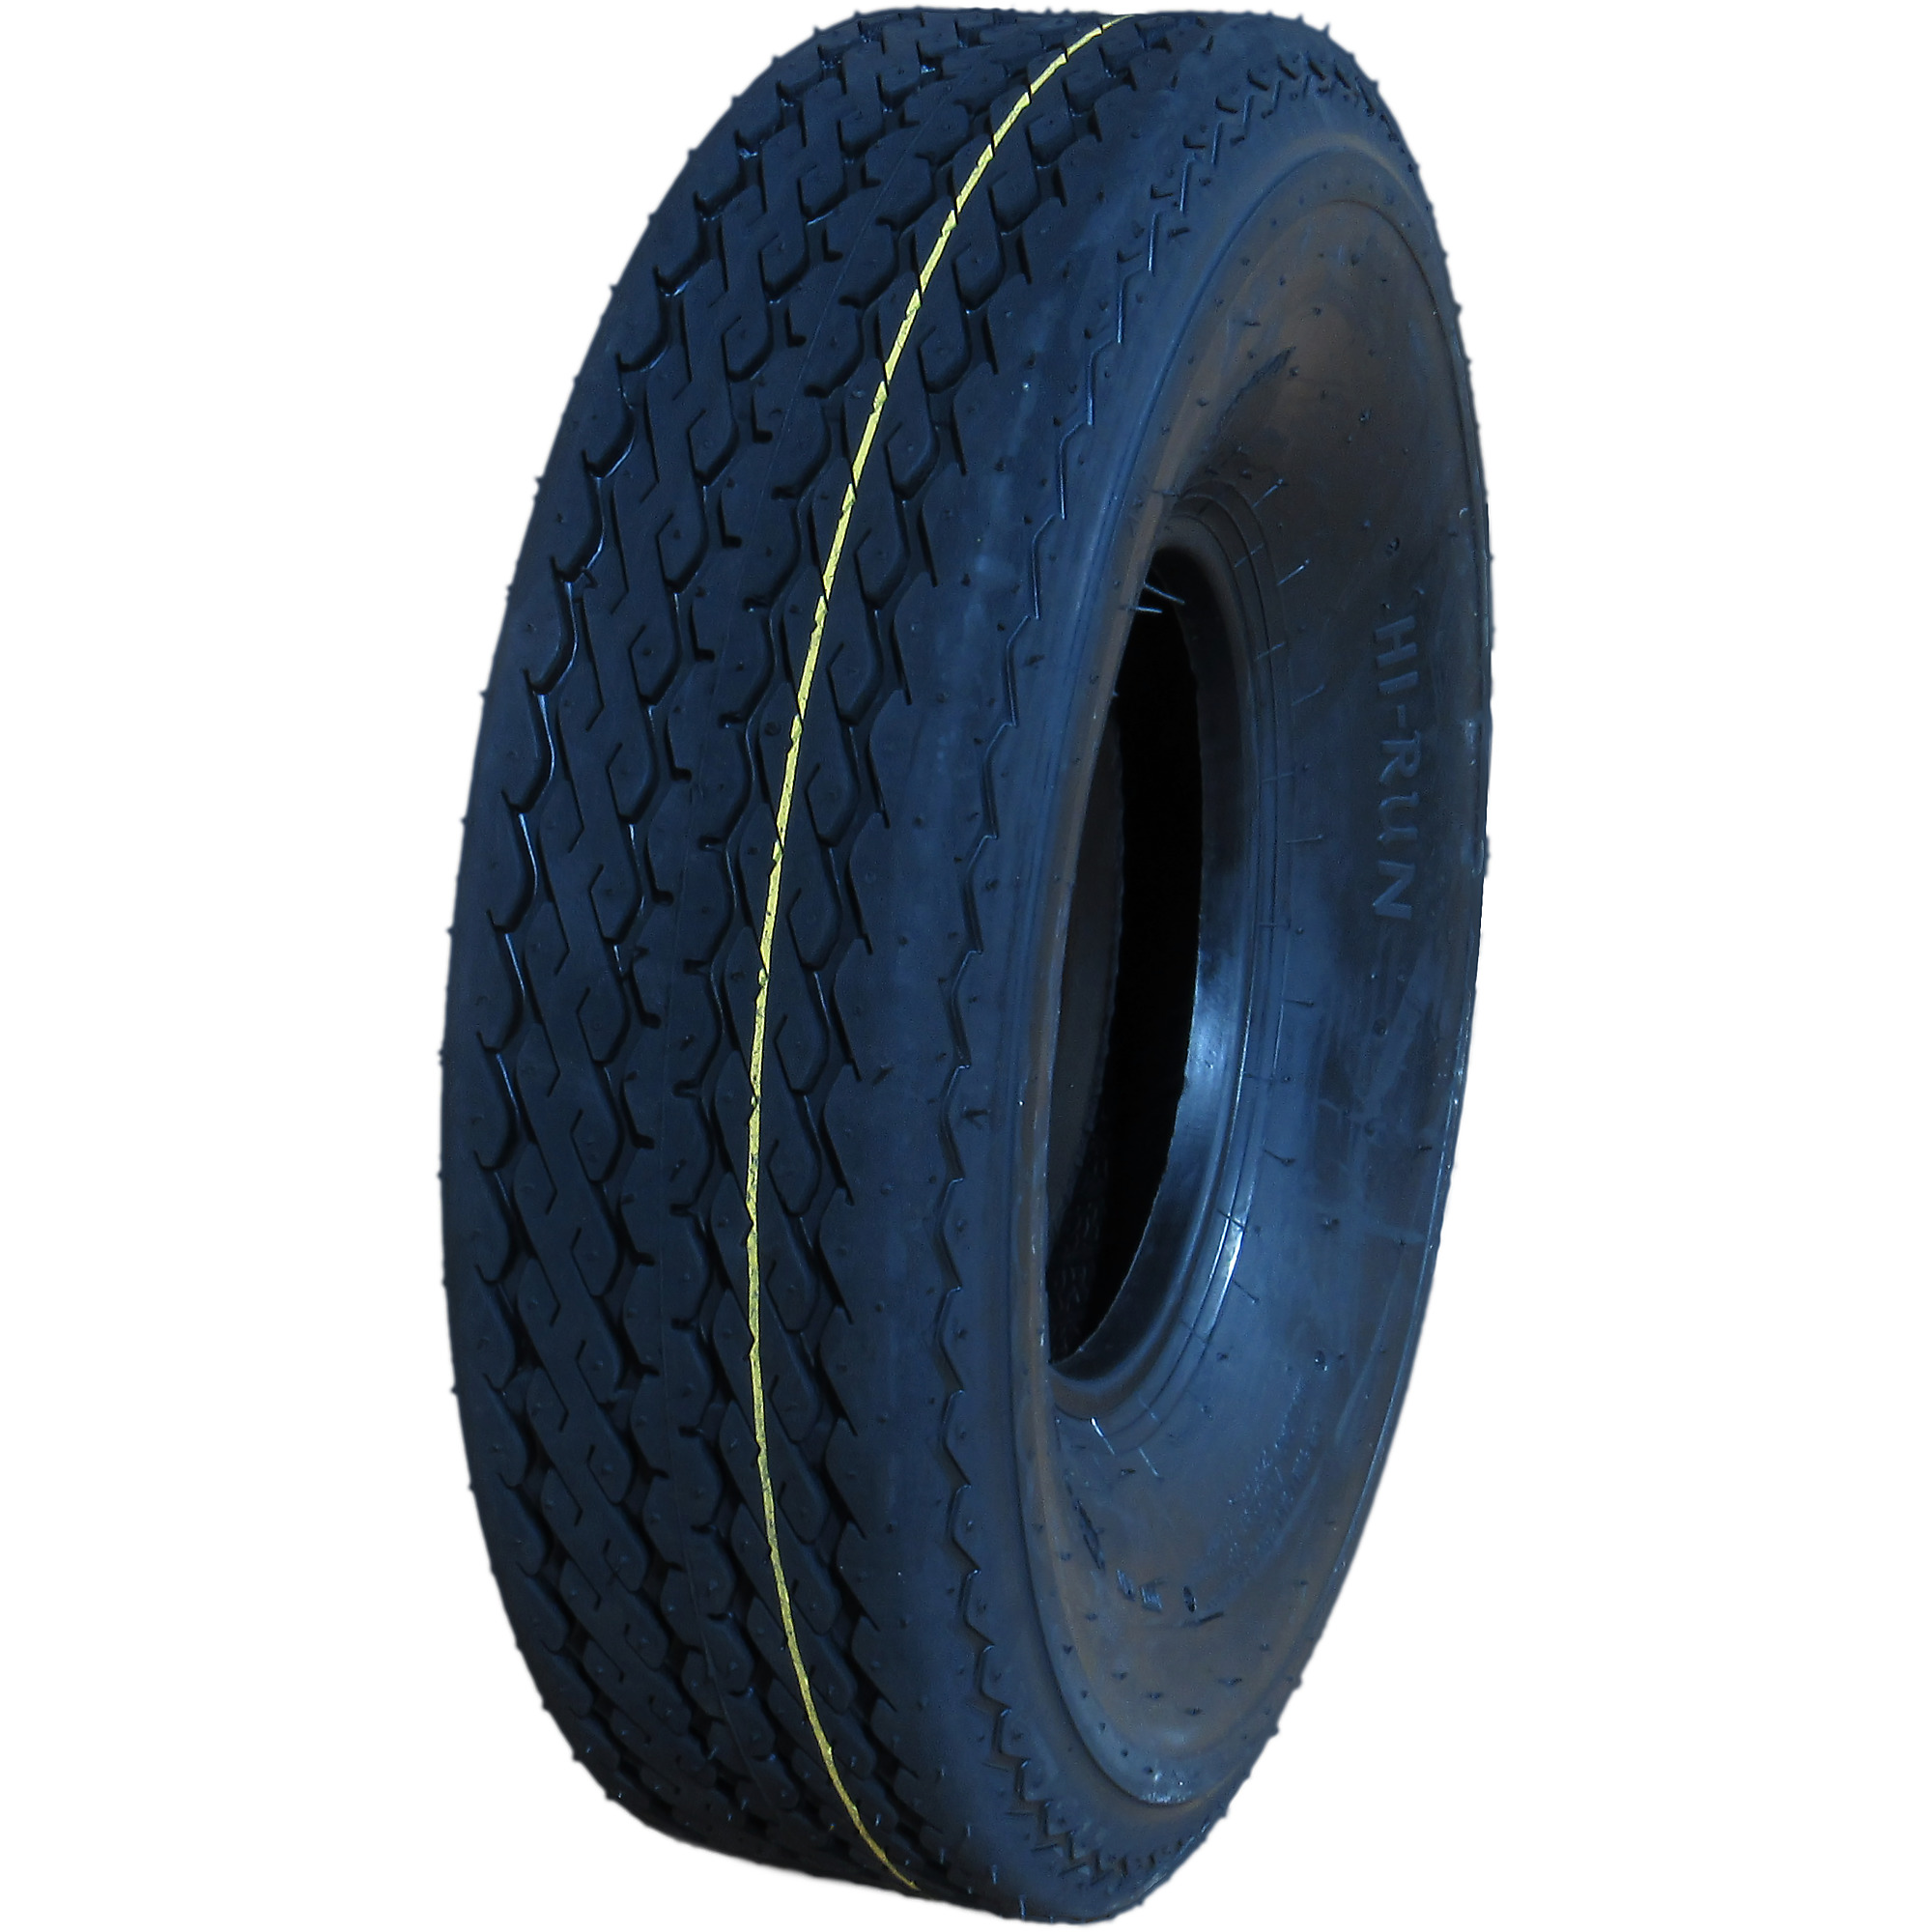 HI-RUN, Highway Trailer Tire, Bias-ply, Tire Size 5.70-8 Load Range Rating B, Model WD1067